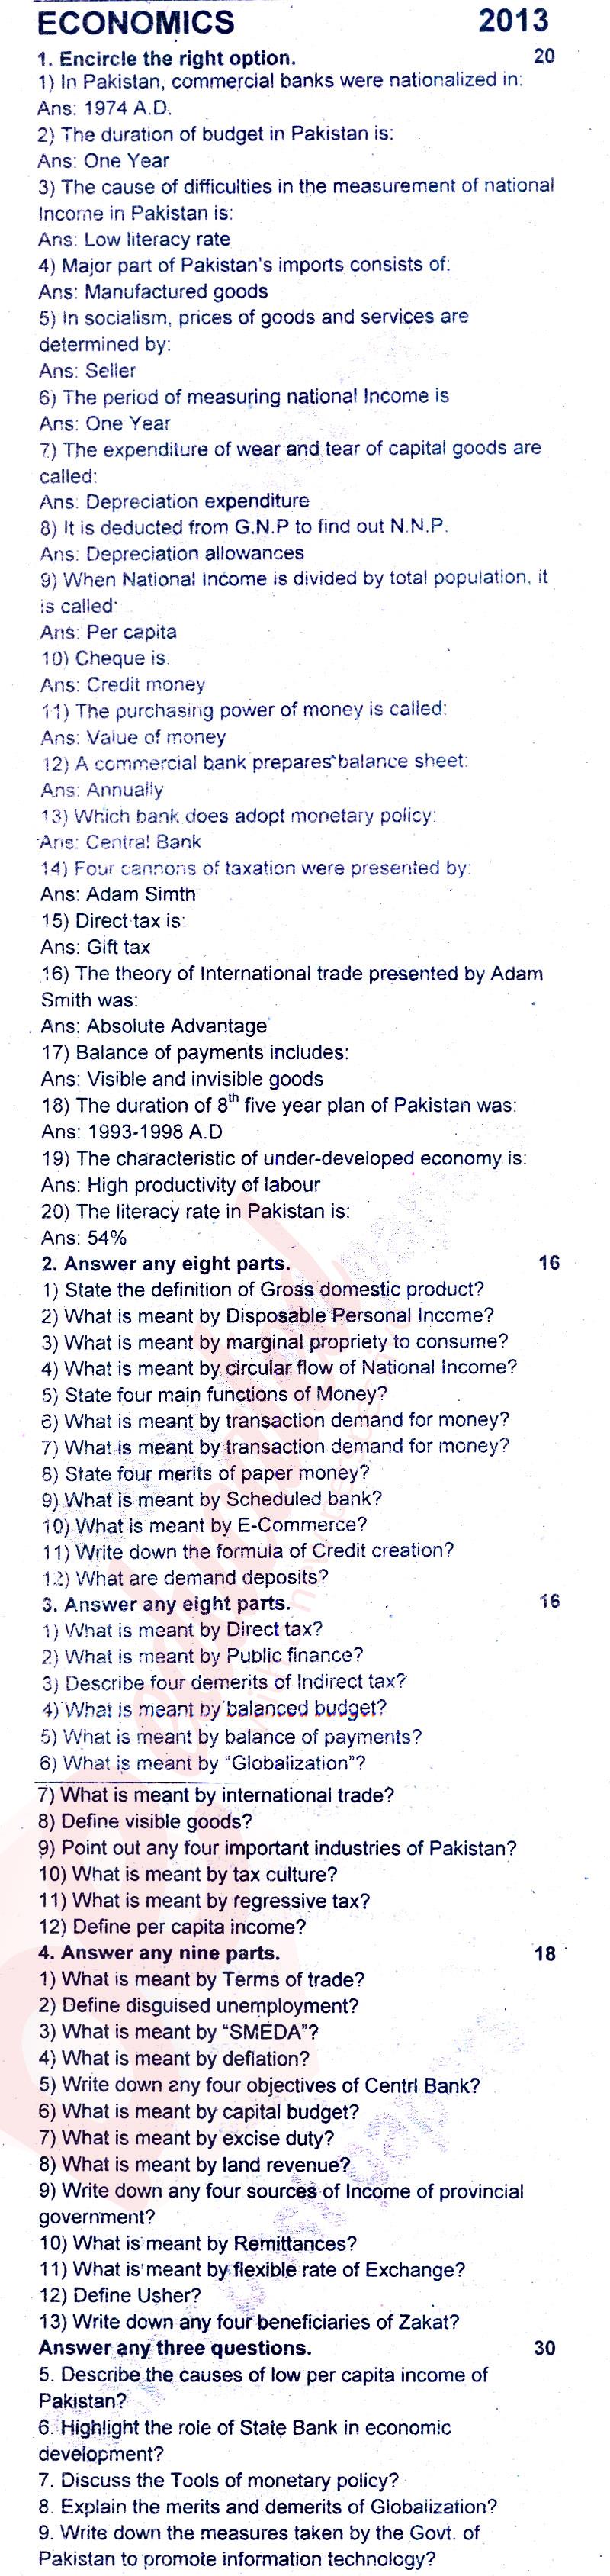 Economics 12th class Past Paper Group 1 BISE Rawalpindi 2013